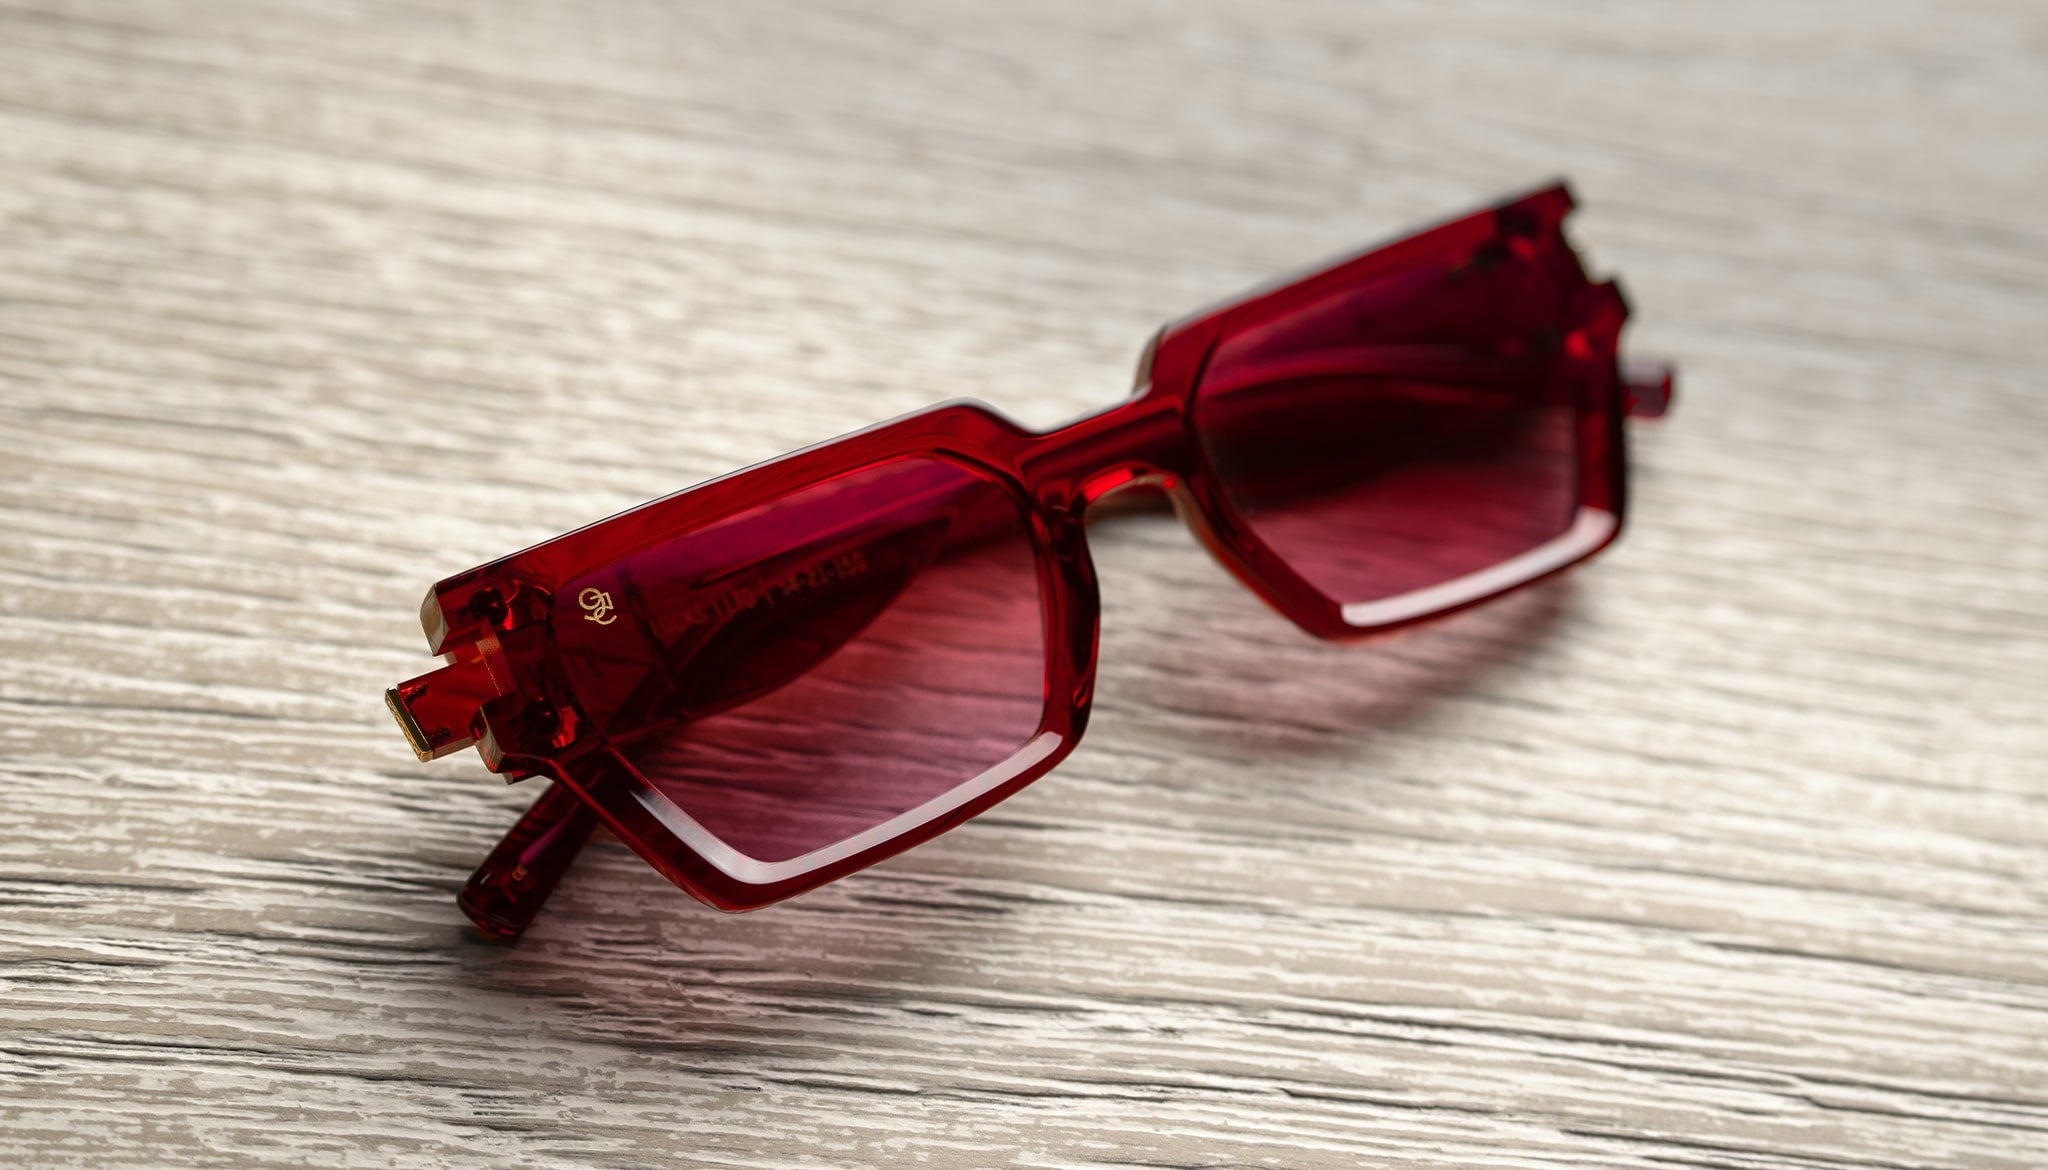 9Five Caps LX Ruby & 24K Gold - Ruby Gradient Sunglasses